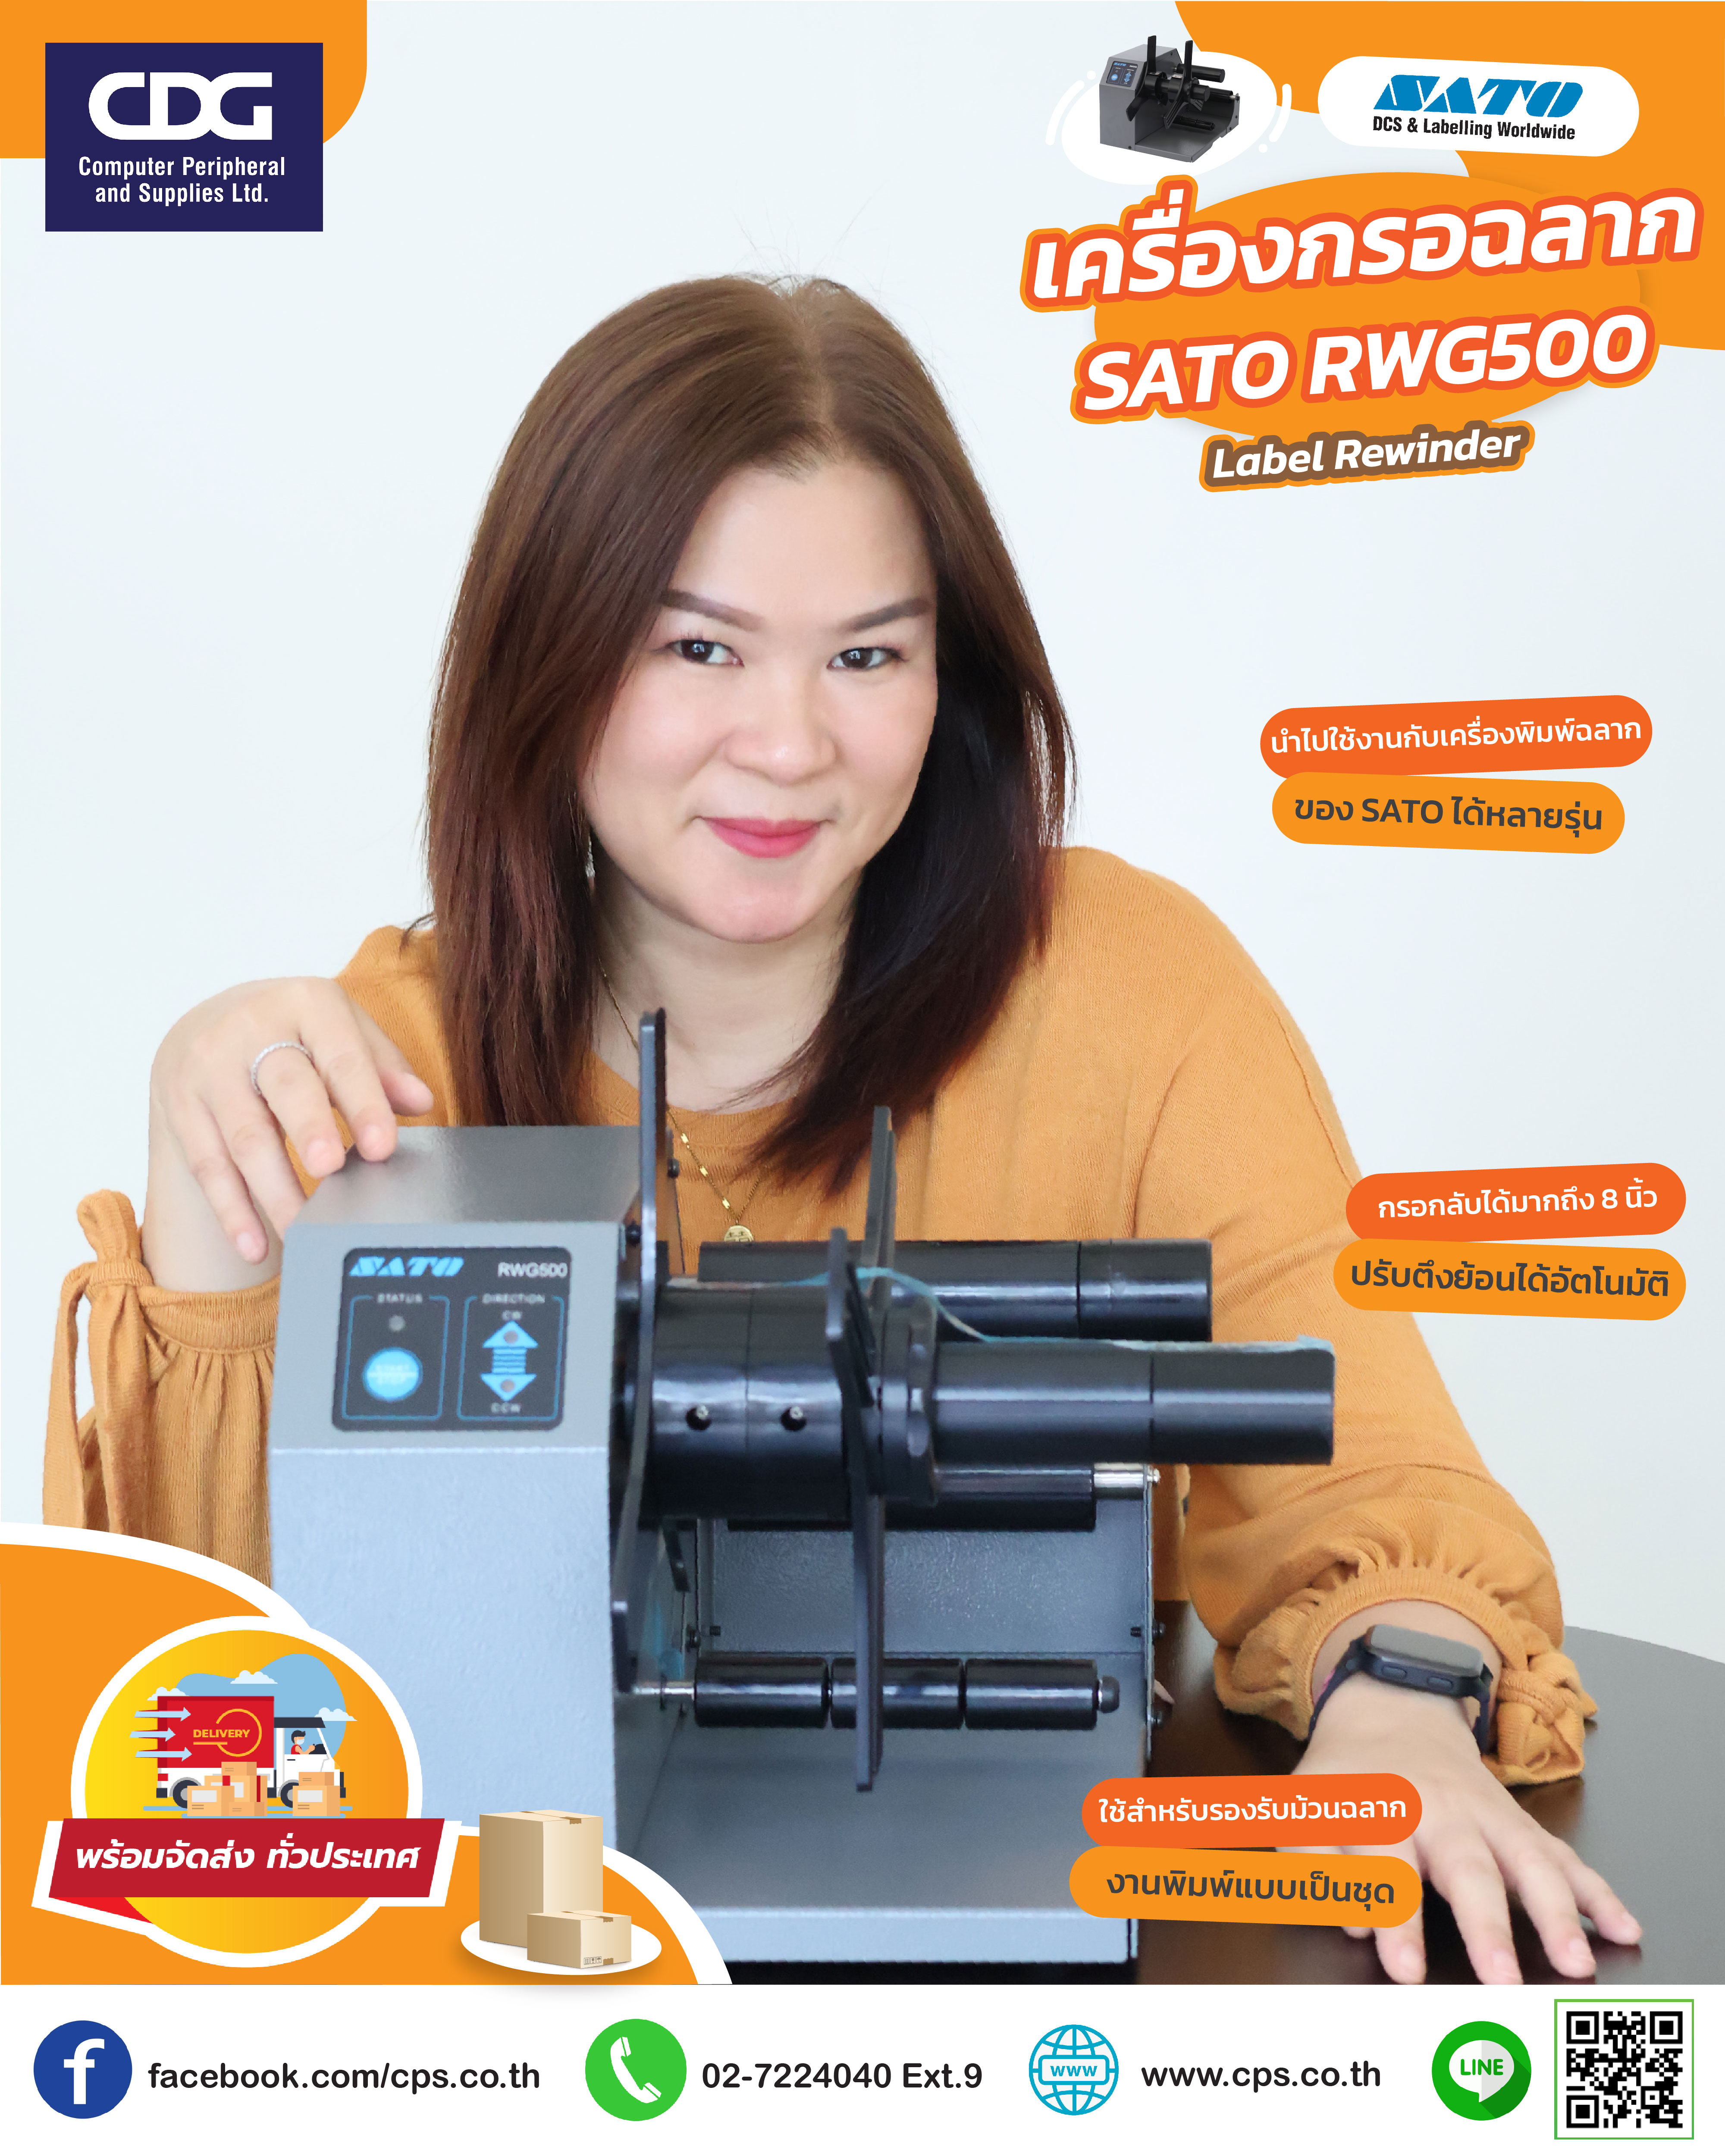 SATO RWG500 Label Rewinder